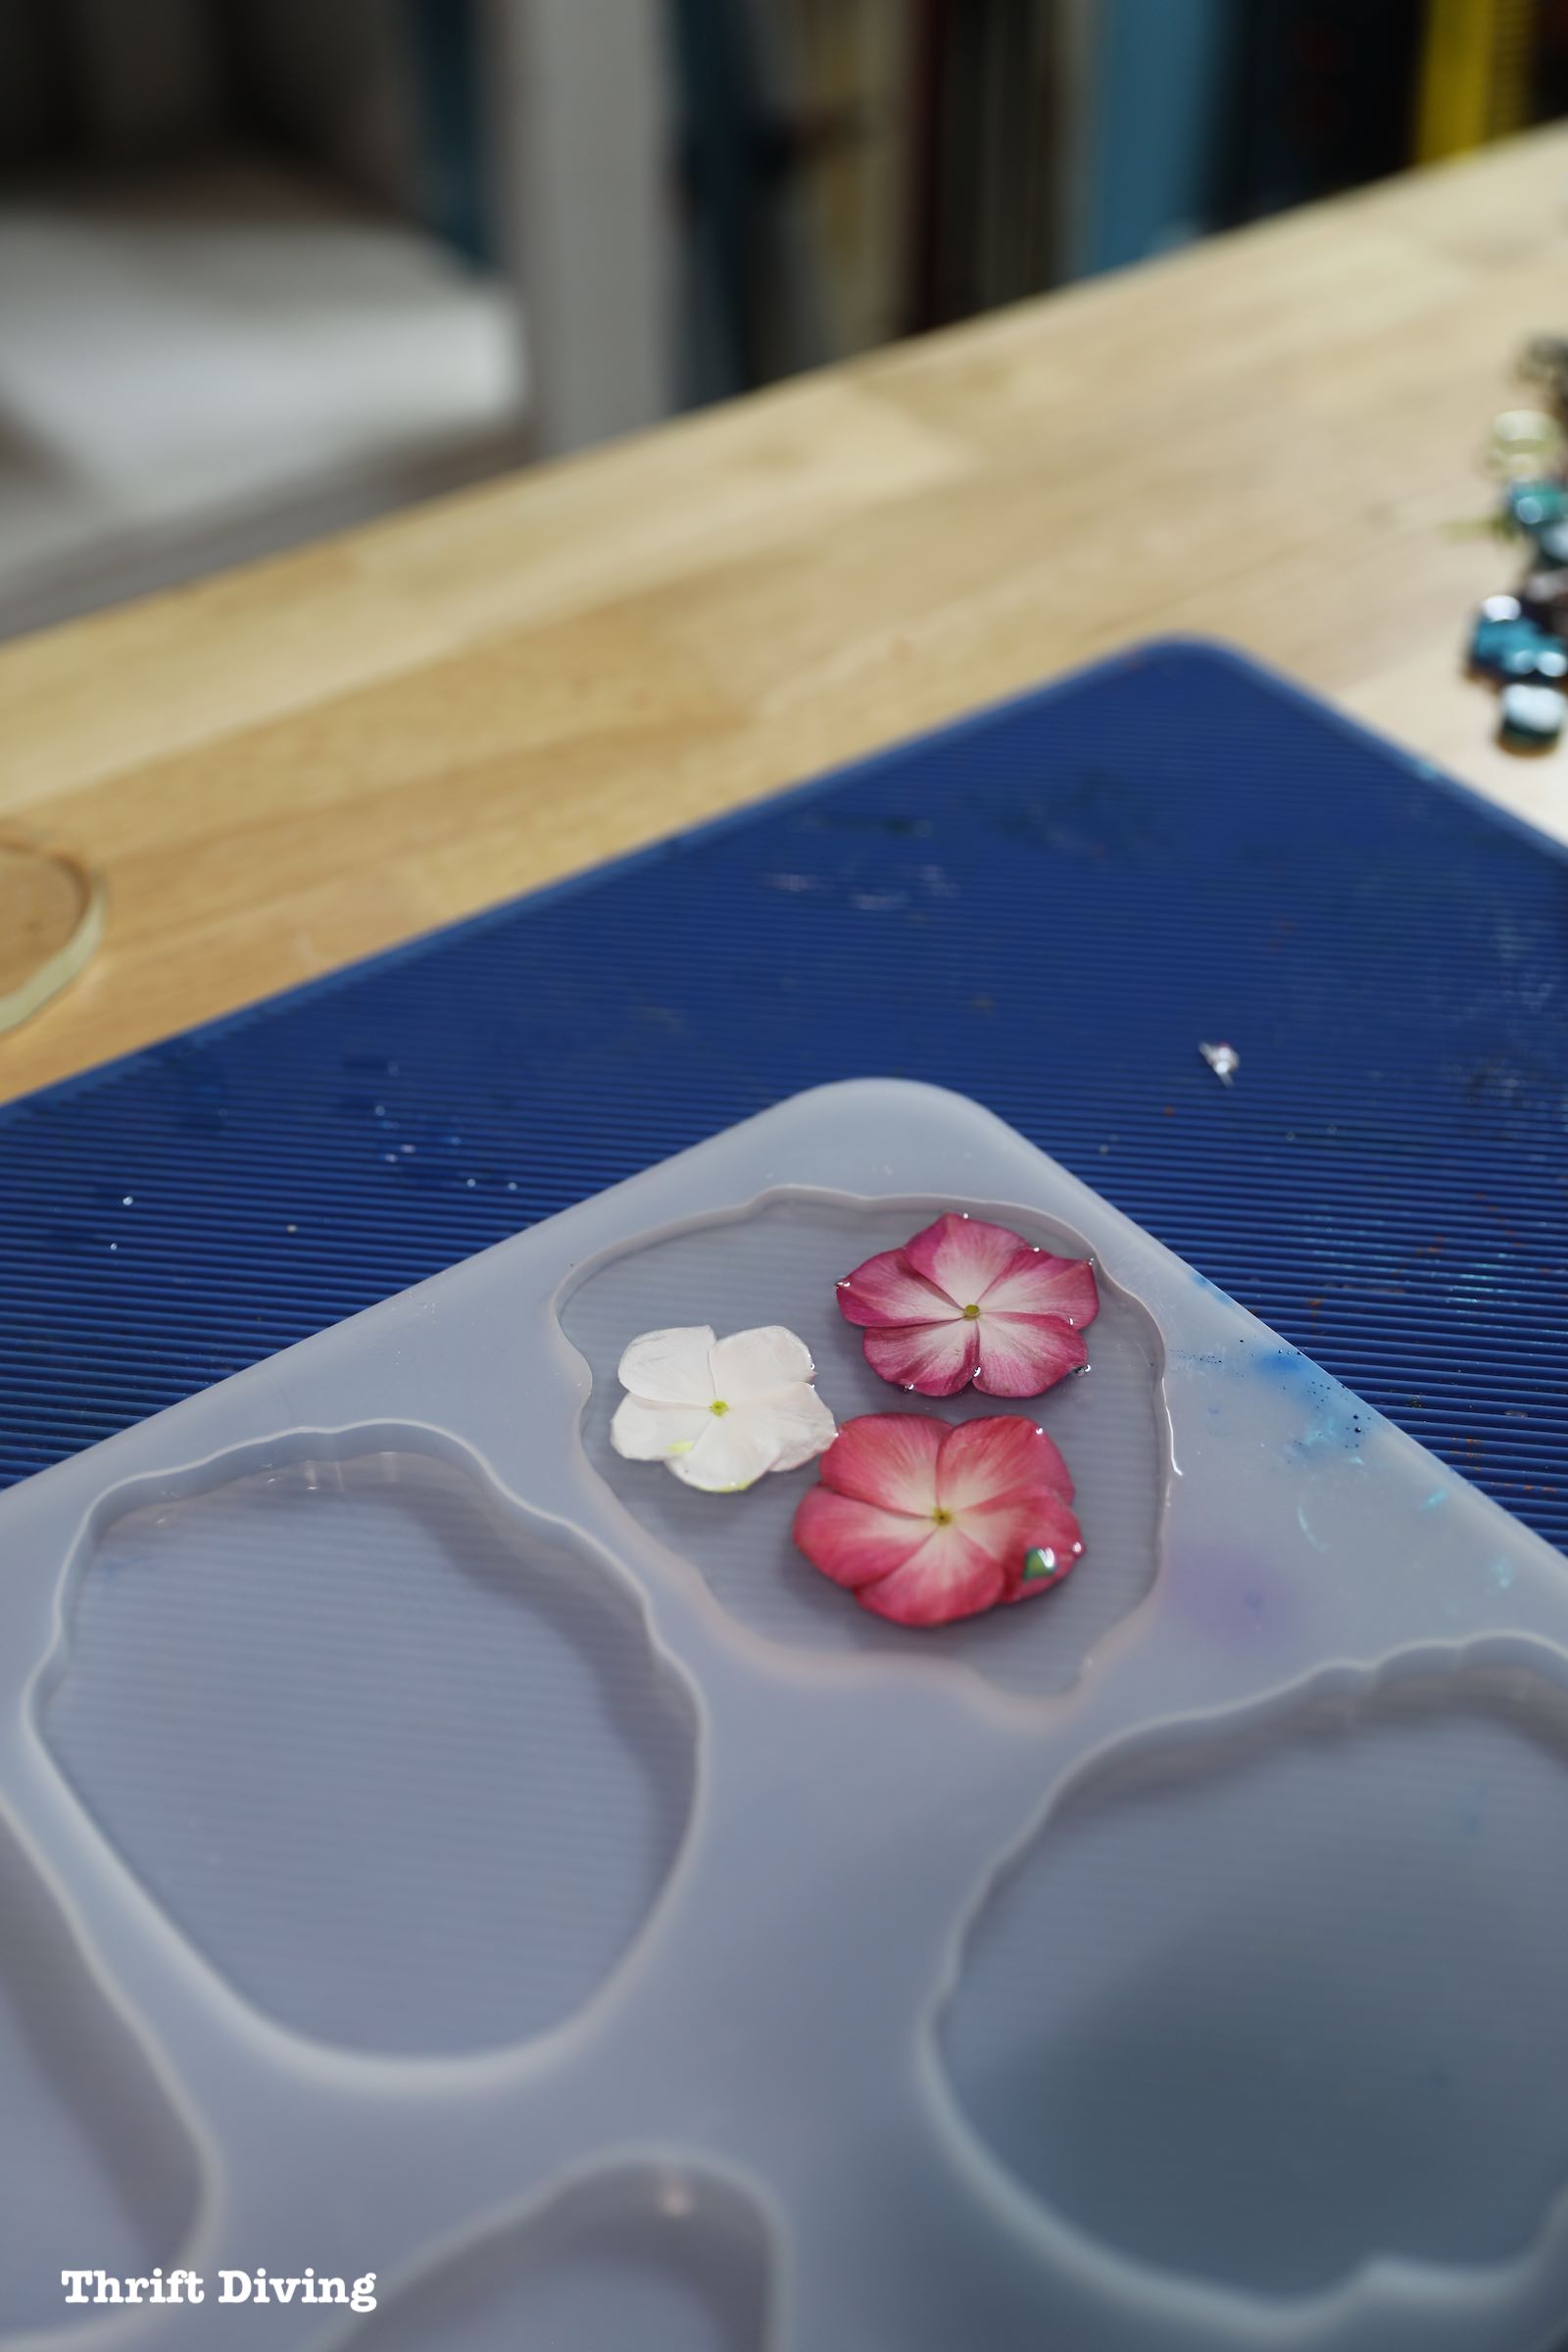 Making epoxy flower art drink coasters - Epoxy fresh flowers - Thrift Diving